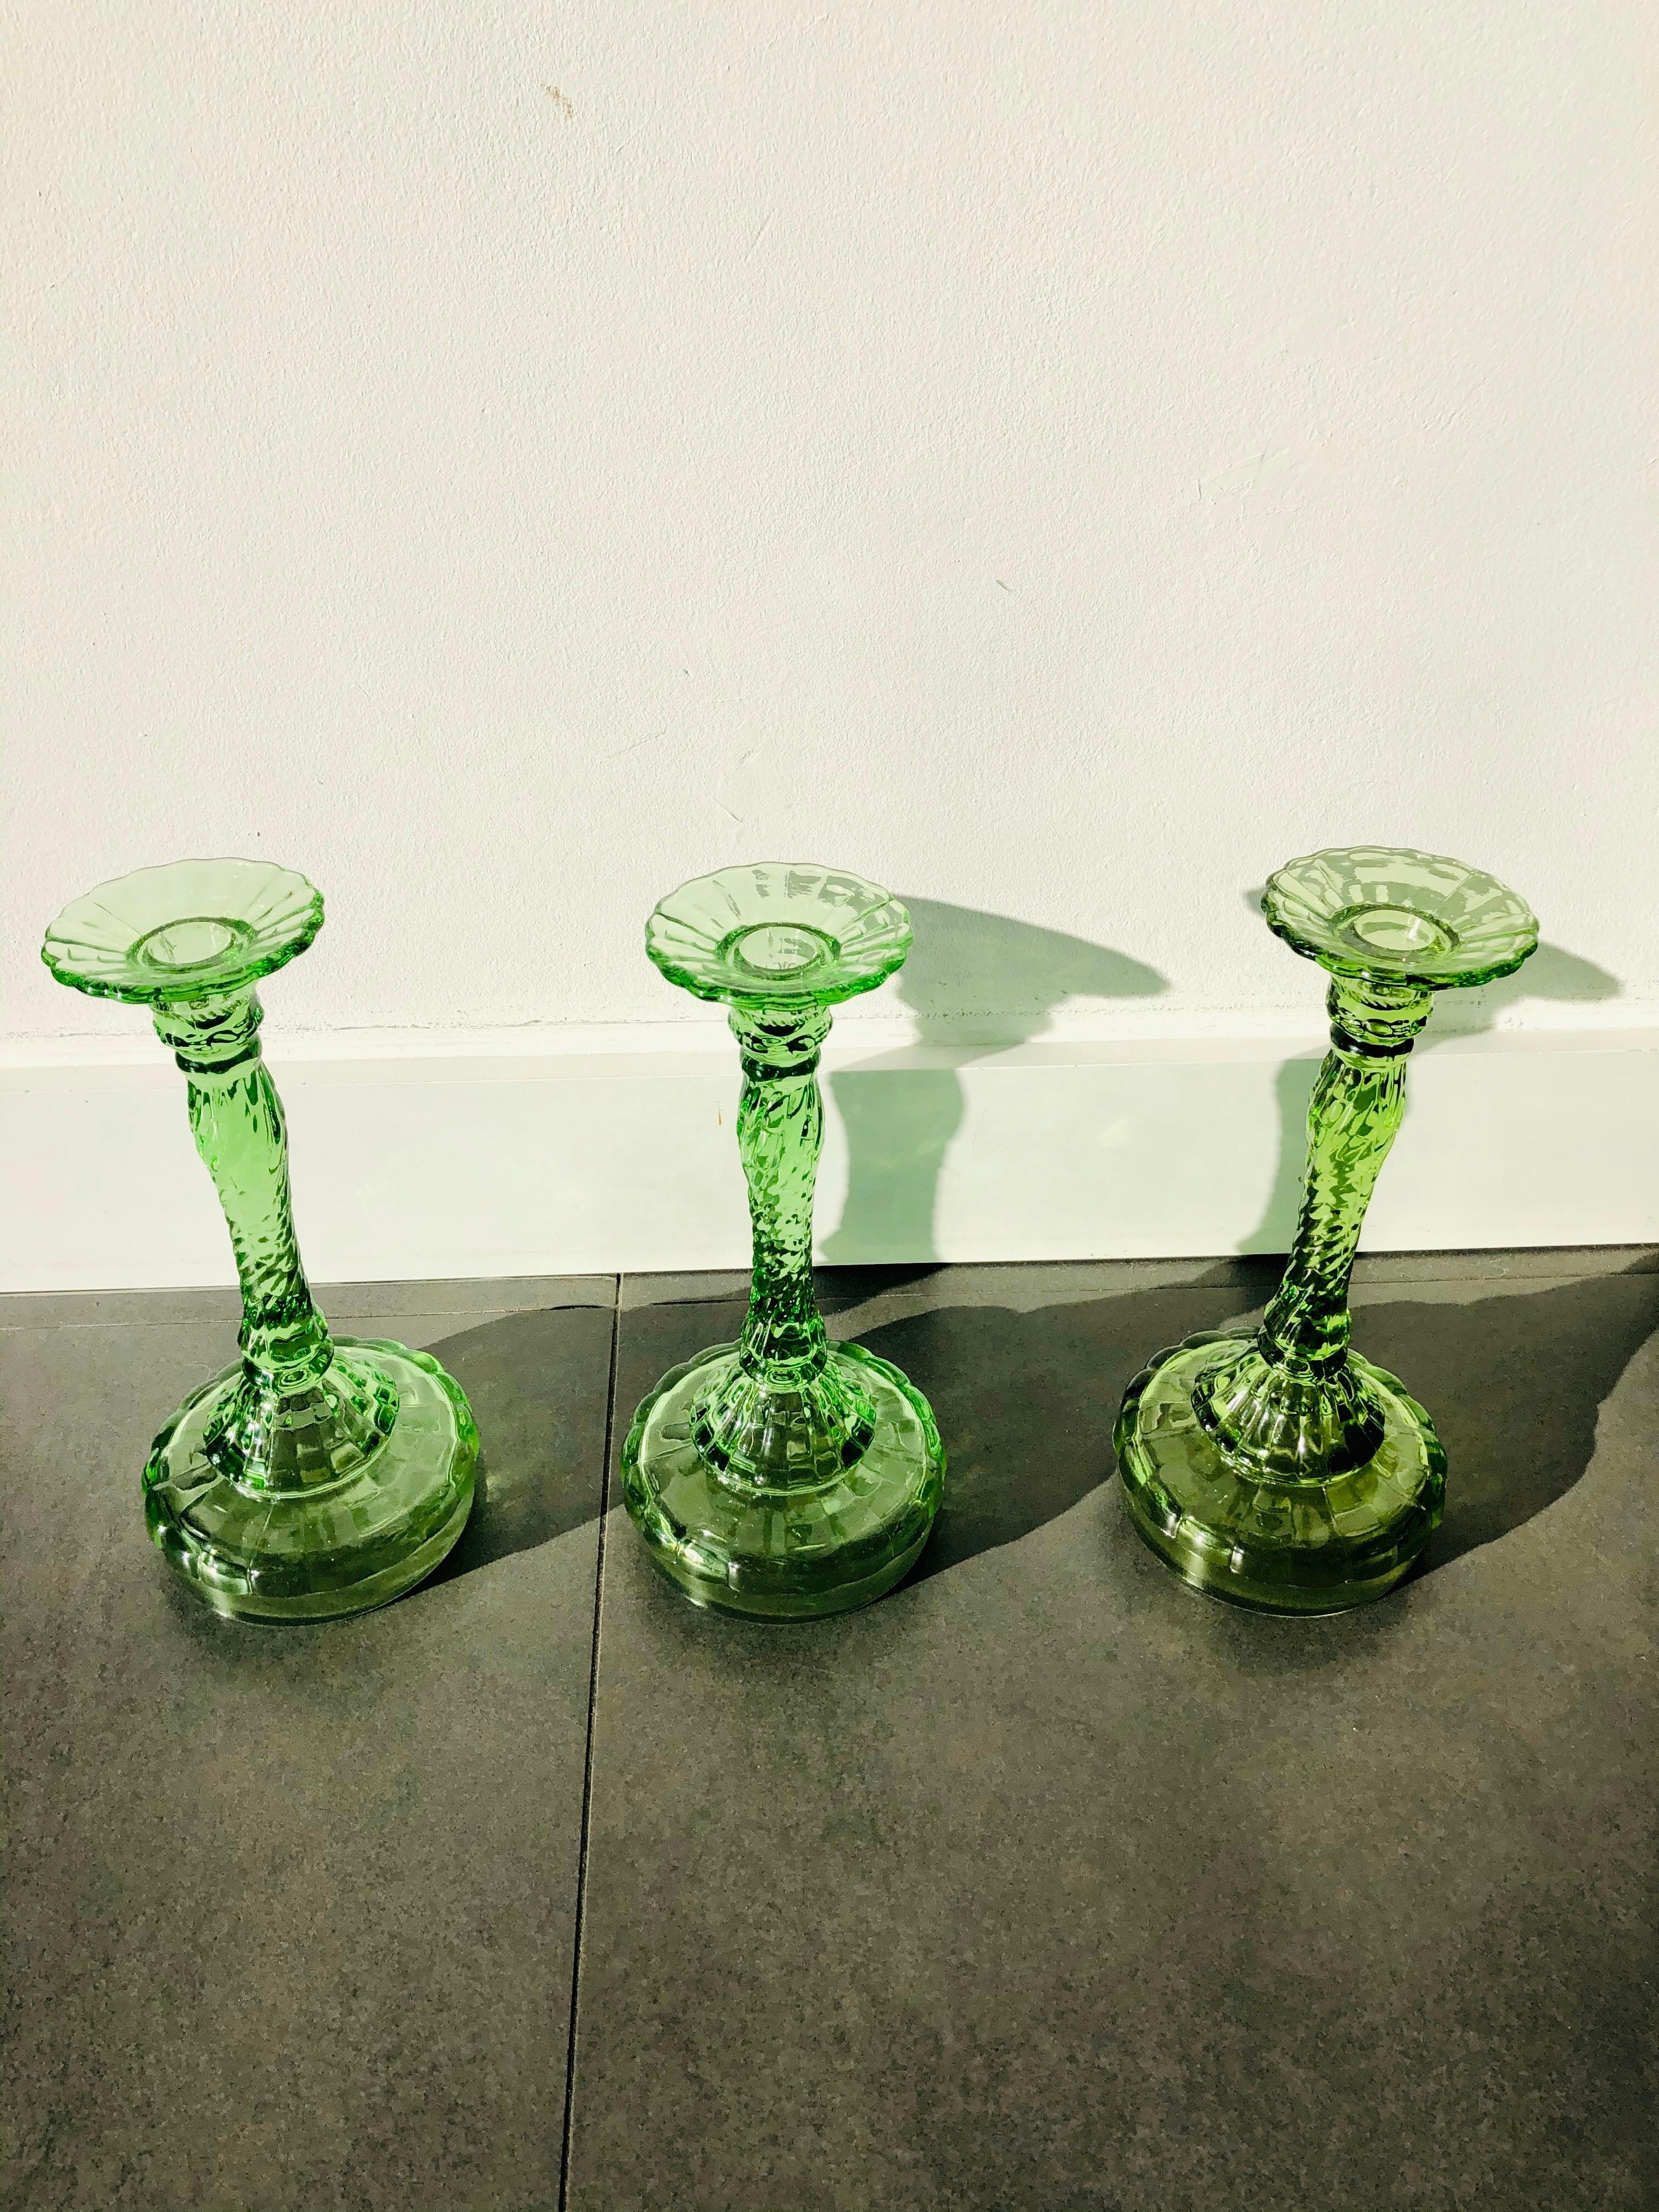 Set of three midcentury Polish modern glass candlesticks, circa 1960. Very good condition. No damages. Beautiful green glass.